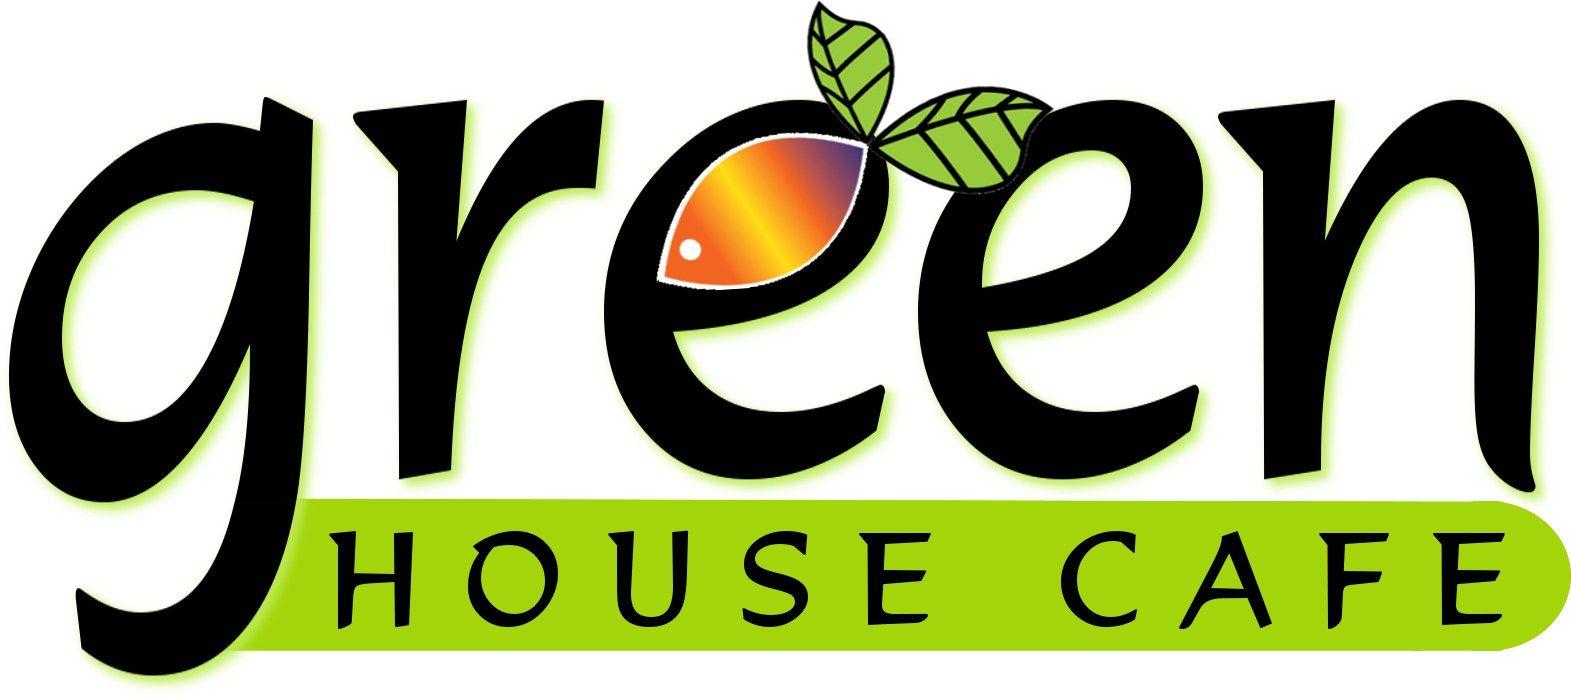 Greenhouse Logo - greenhouse logo w-o background -new copy | Green House Cafe ...